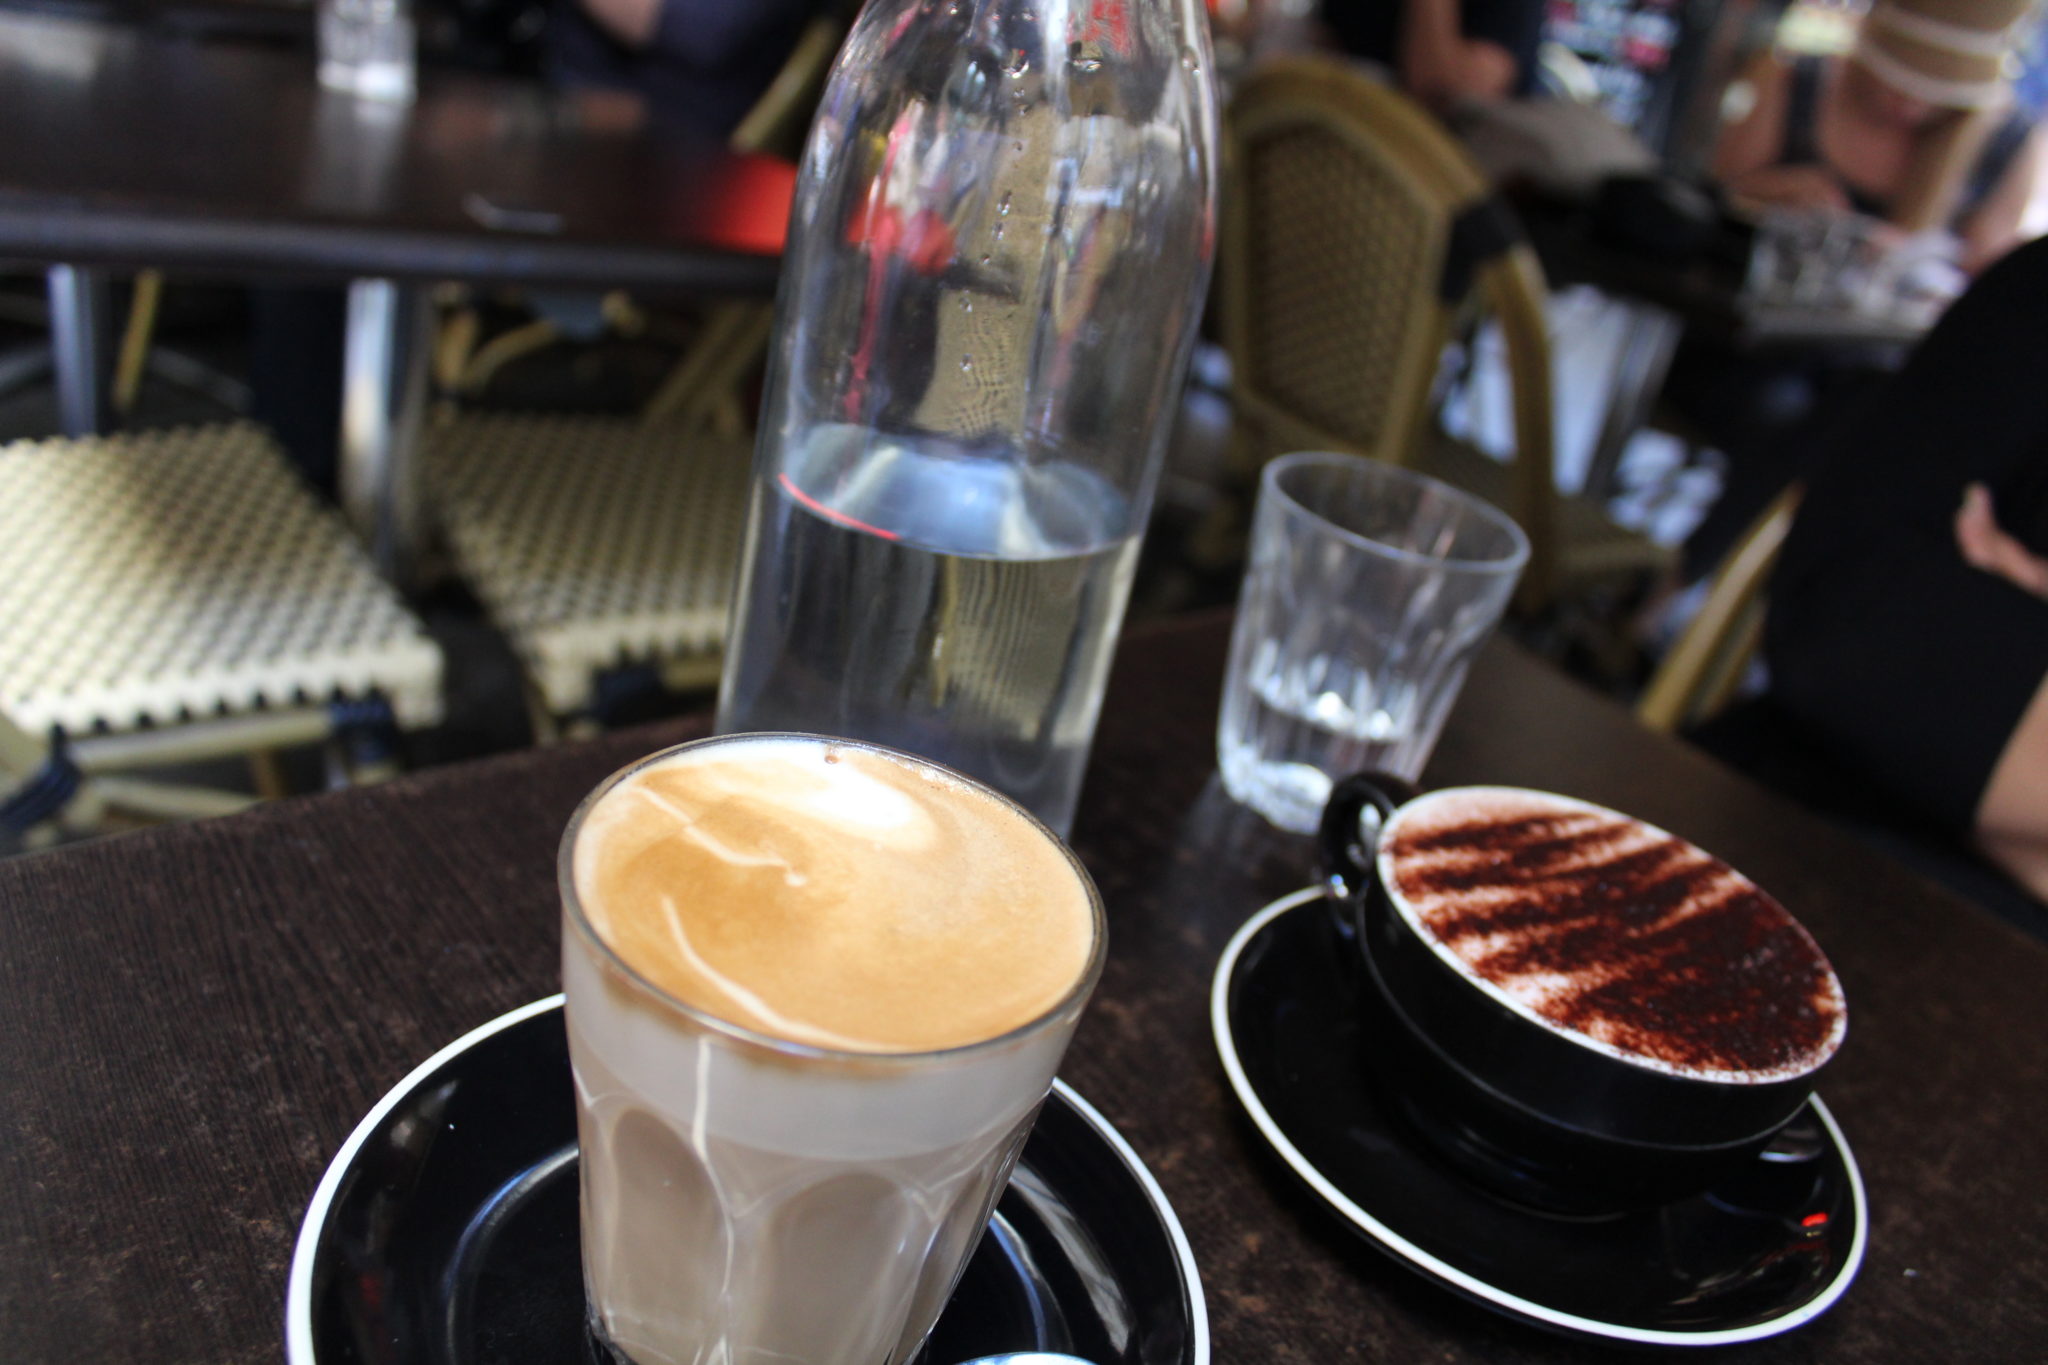 Melbourne’s best caffè latte?